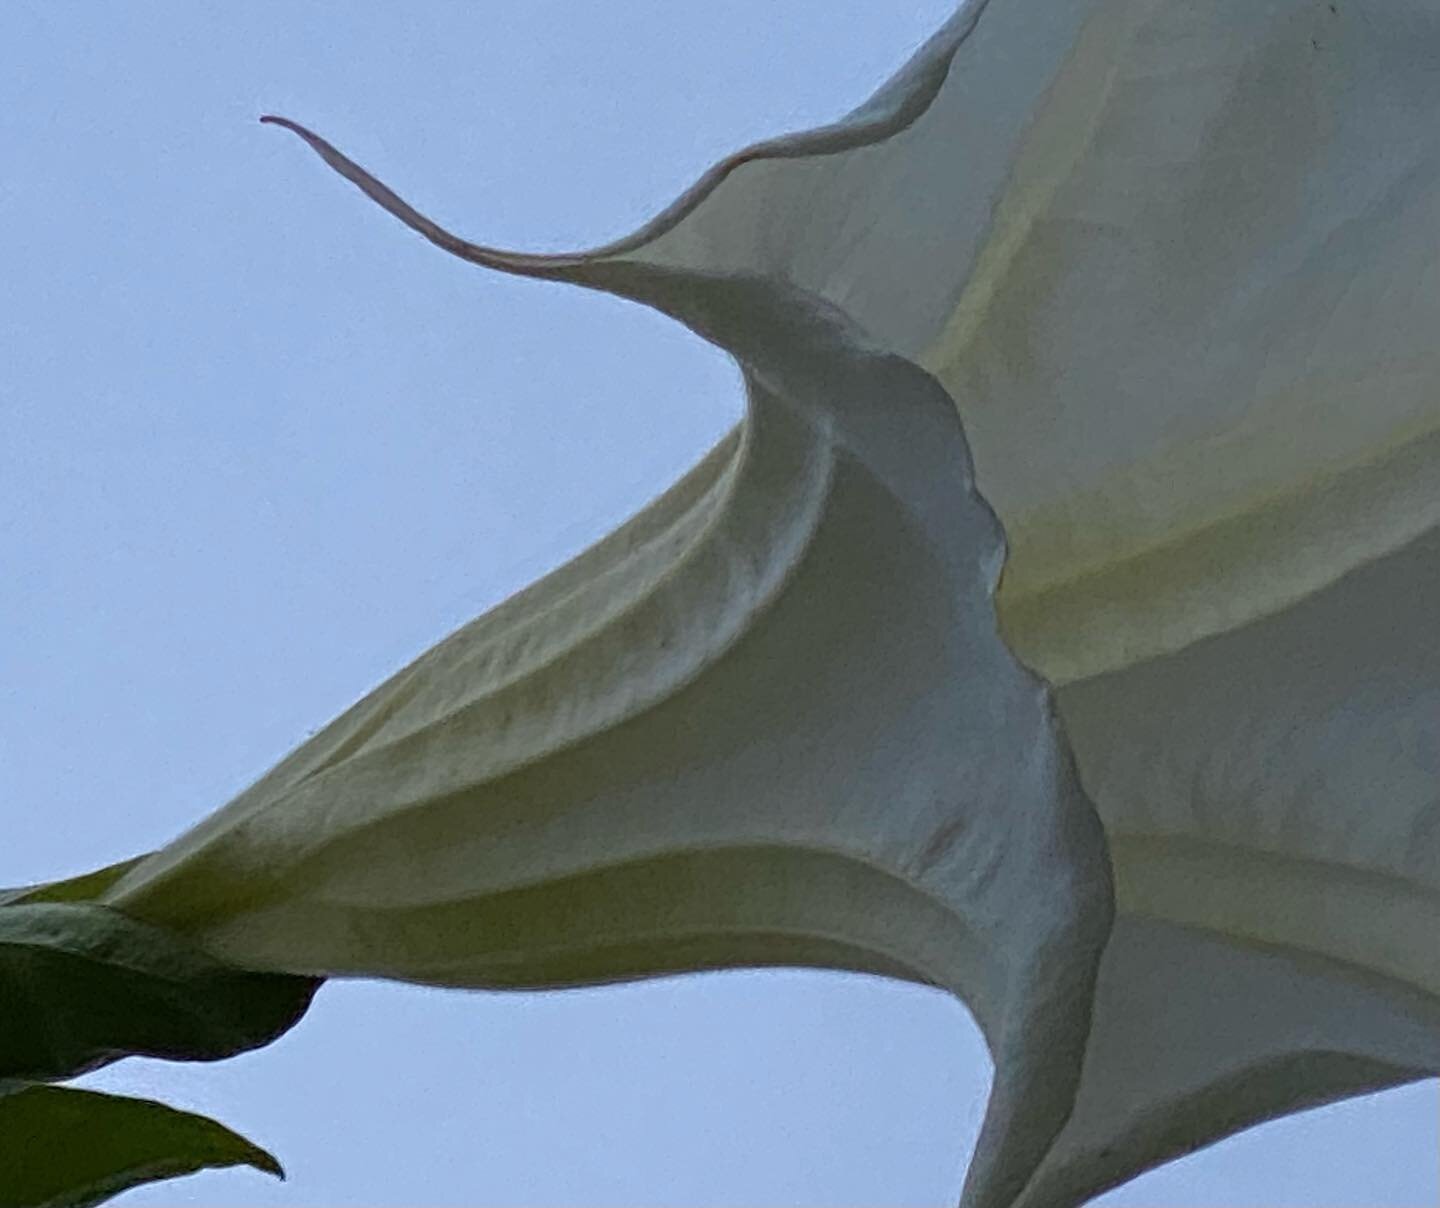 Evening blooms on the Brugmansia.  If only cameras captured scents. 
⁣
#comehither #moths #brugmansia #angelstrumpet #nightbloomer #moth #pollinators #pollinator #night #bloom #gloaming #landscape #summer #californiagardens #garden #pollinatorgarden 